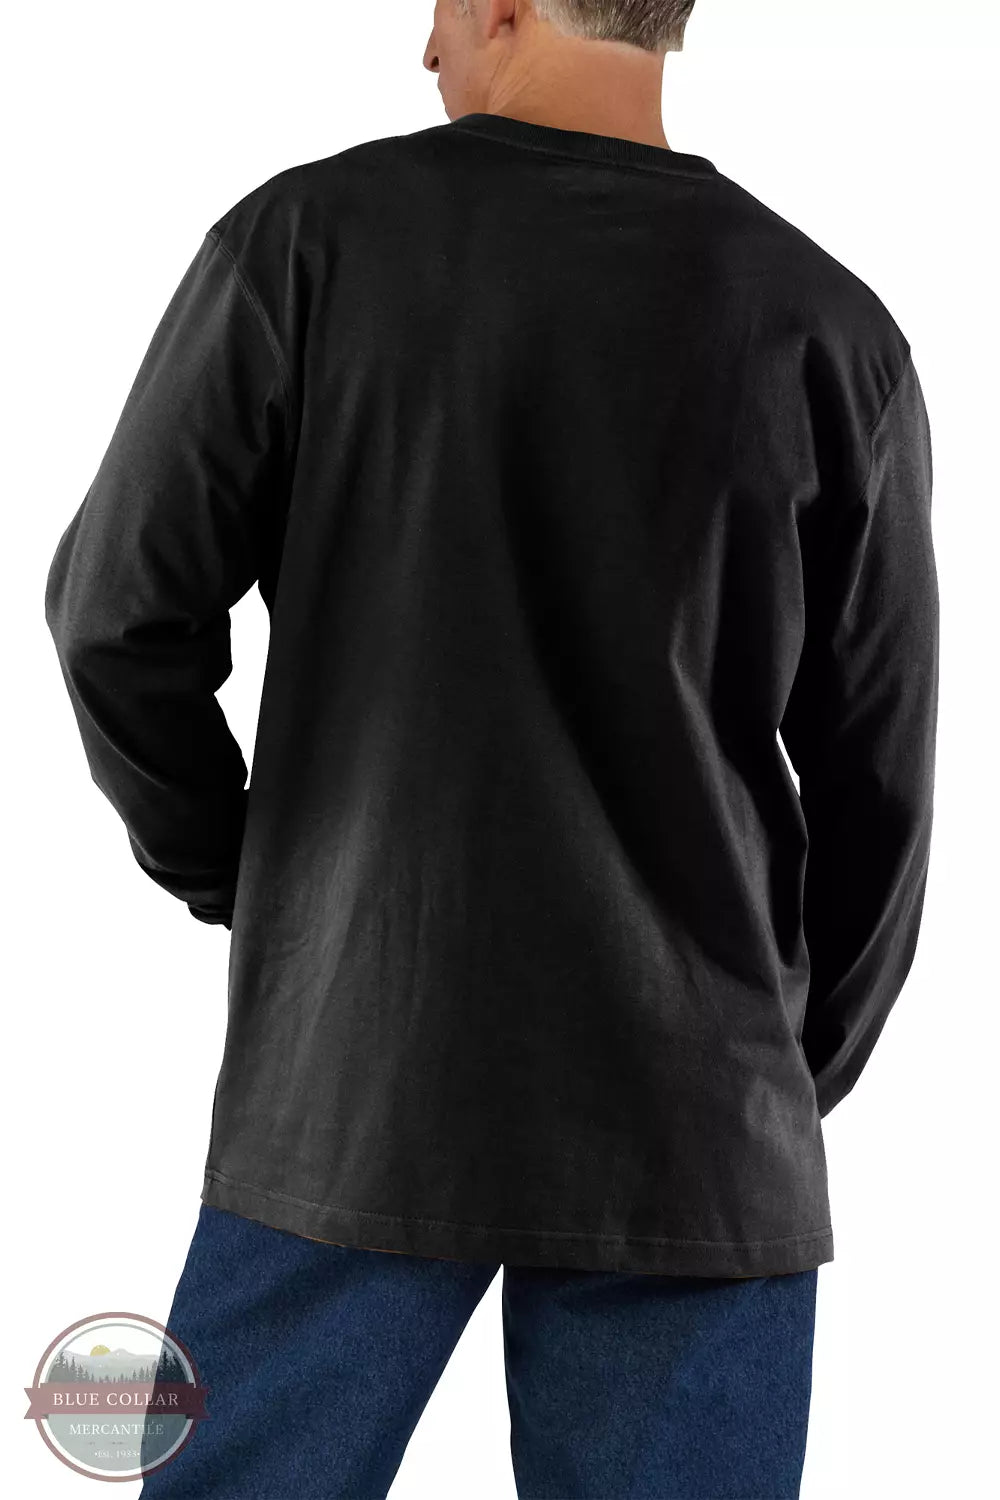 Carhartt K126 Loose Fit Heavyweight Pocket Long Sleeve T-Shirt Black Back View